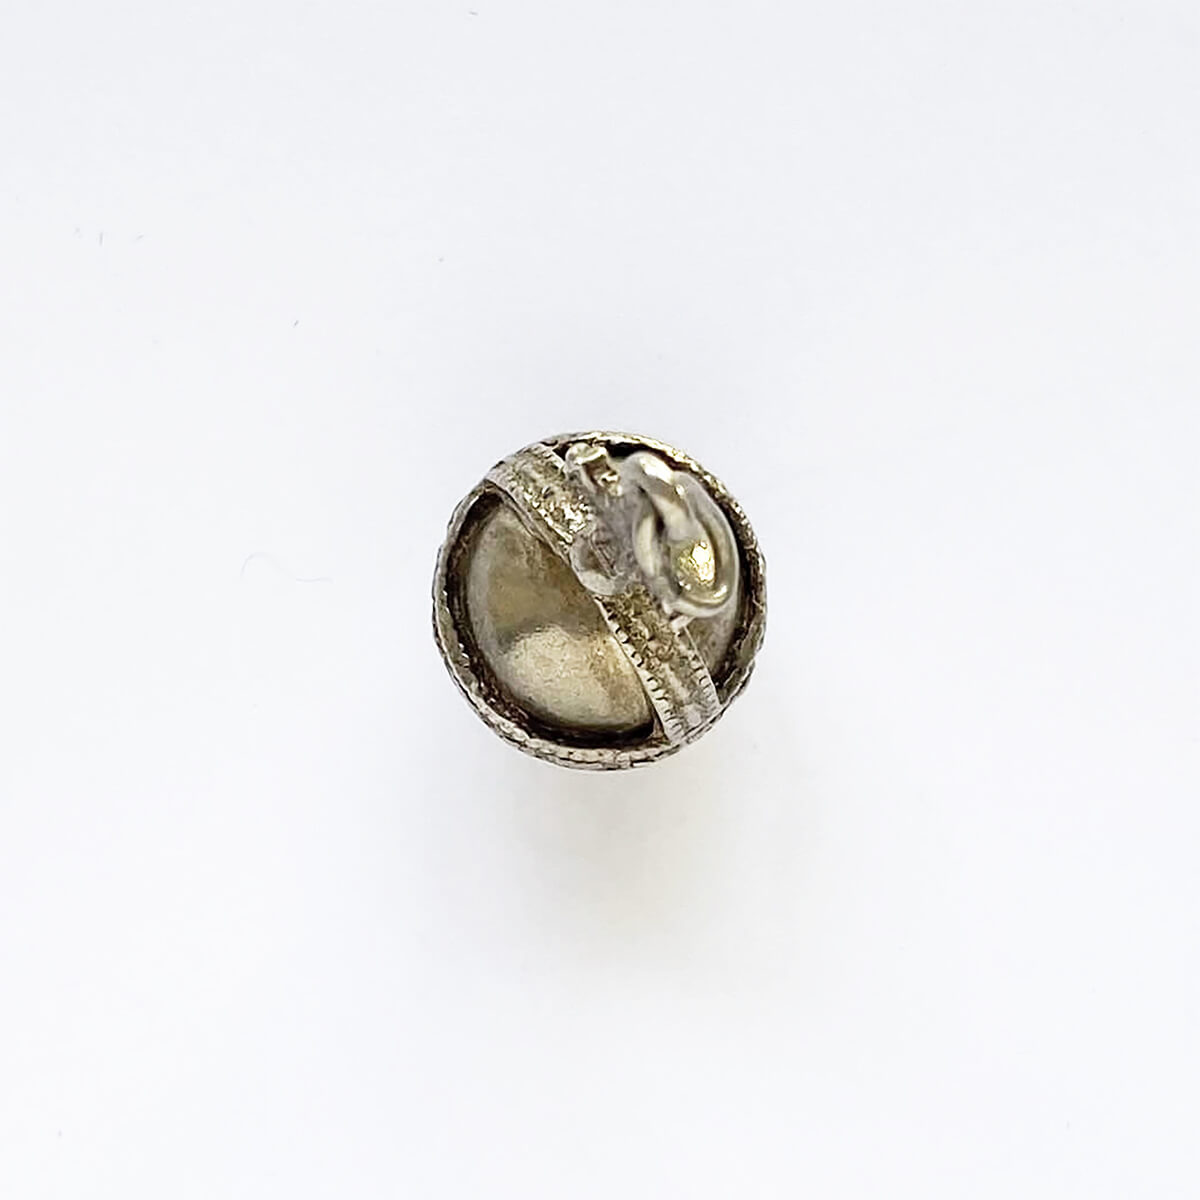 Vintage silver globus cruciger charm royal pendant from Charmarama Charms